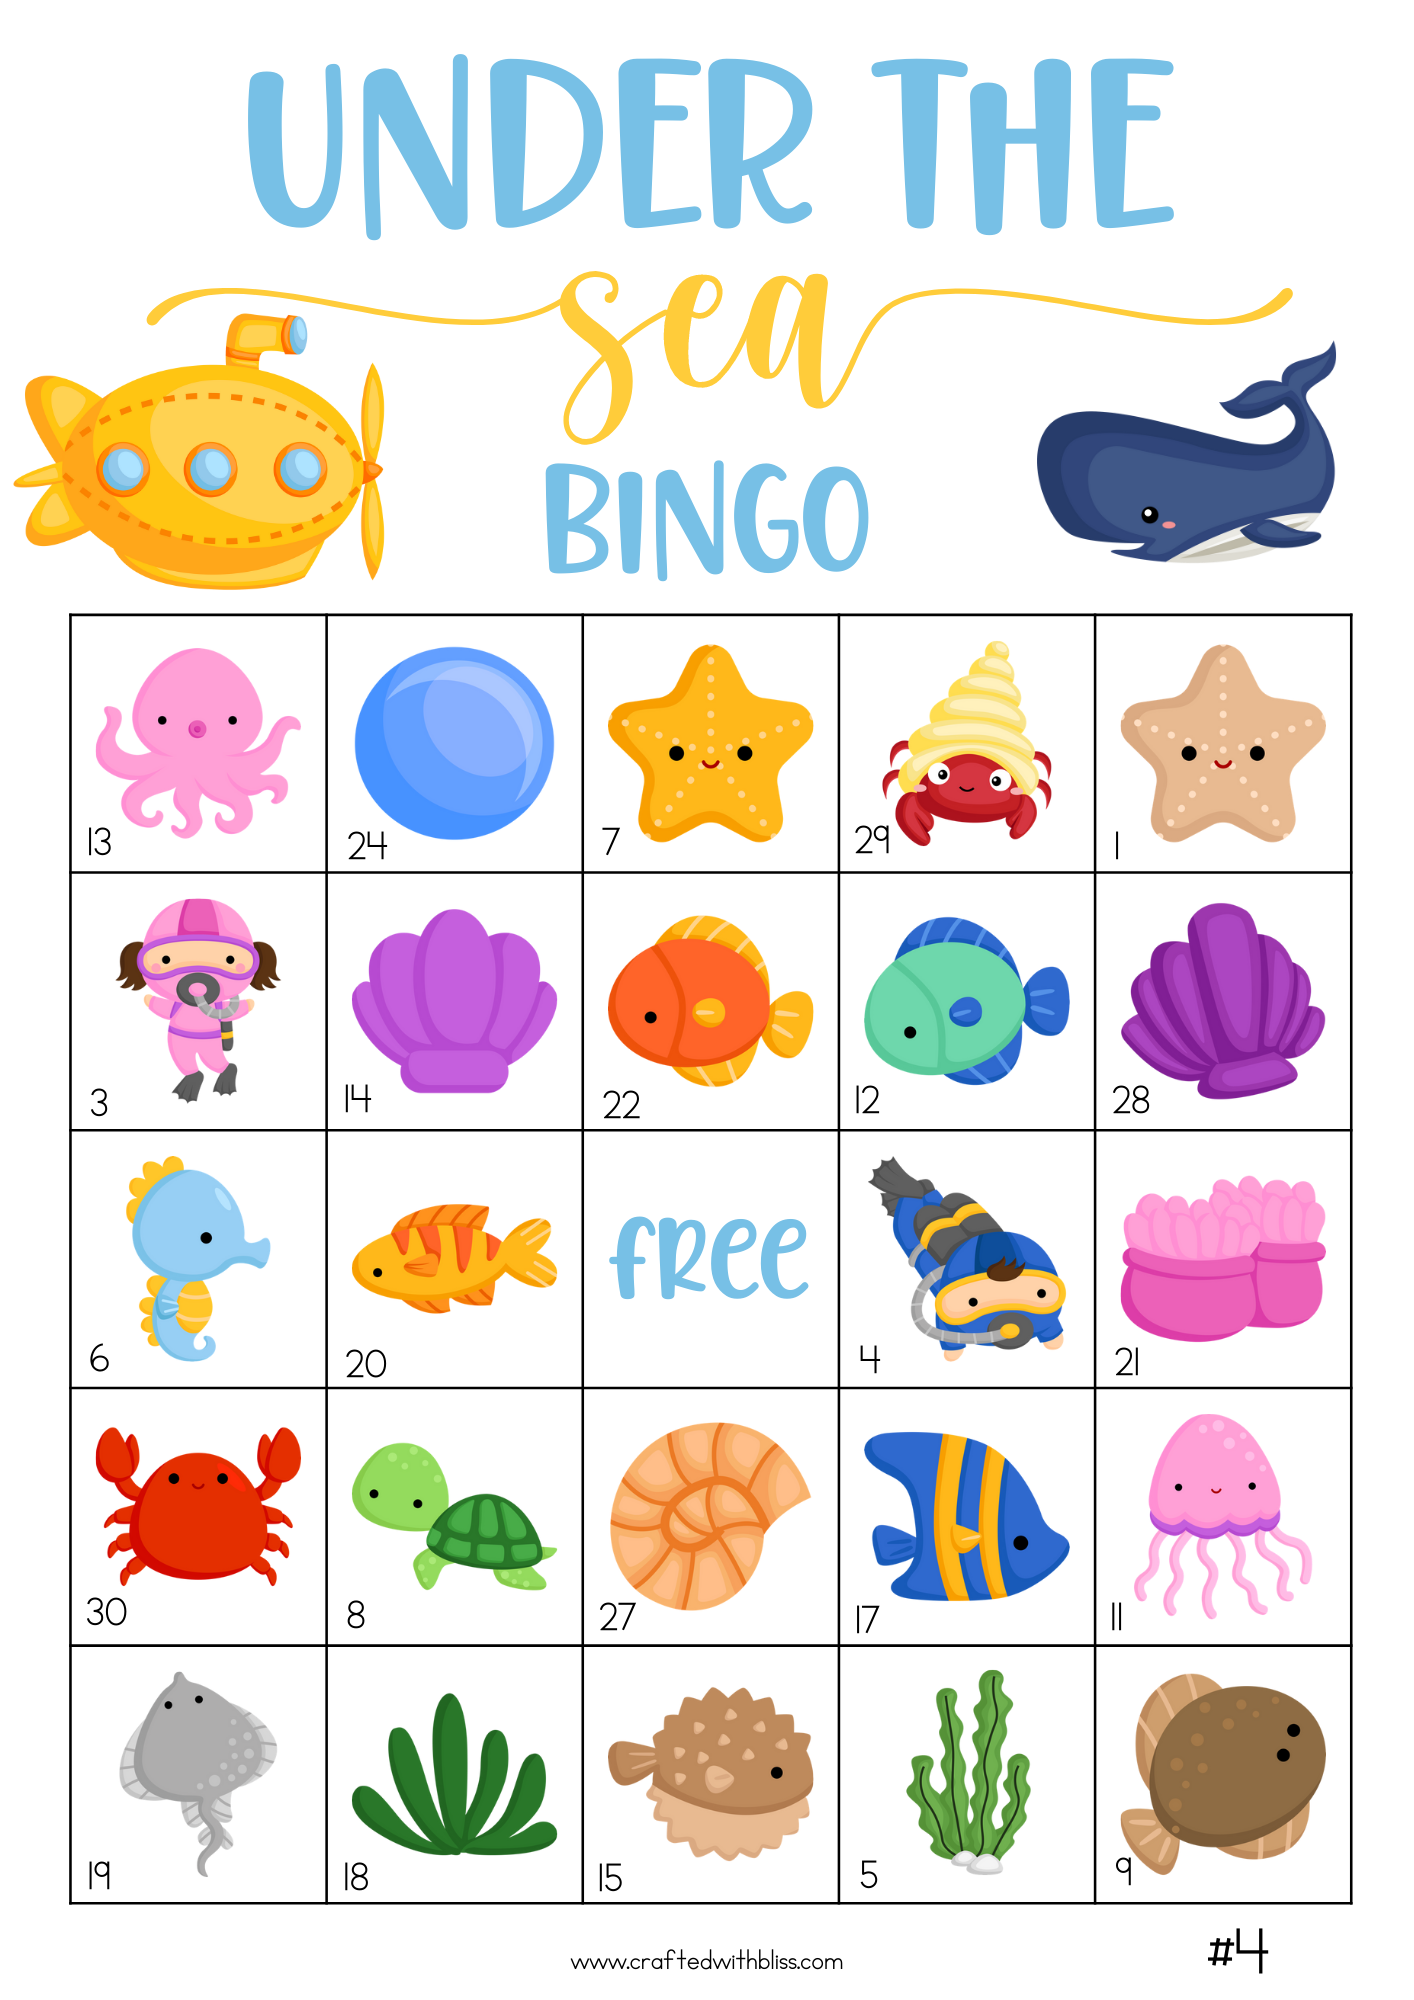 50 Under the Sea Theme Bingo Cards (5x5)